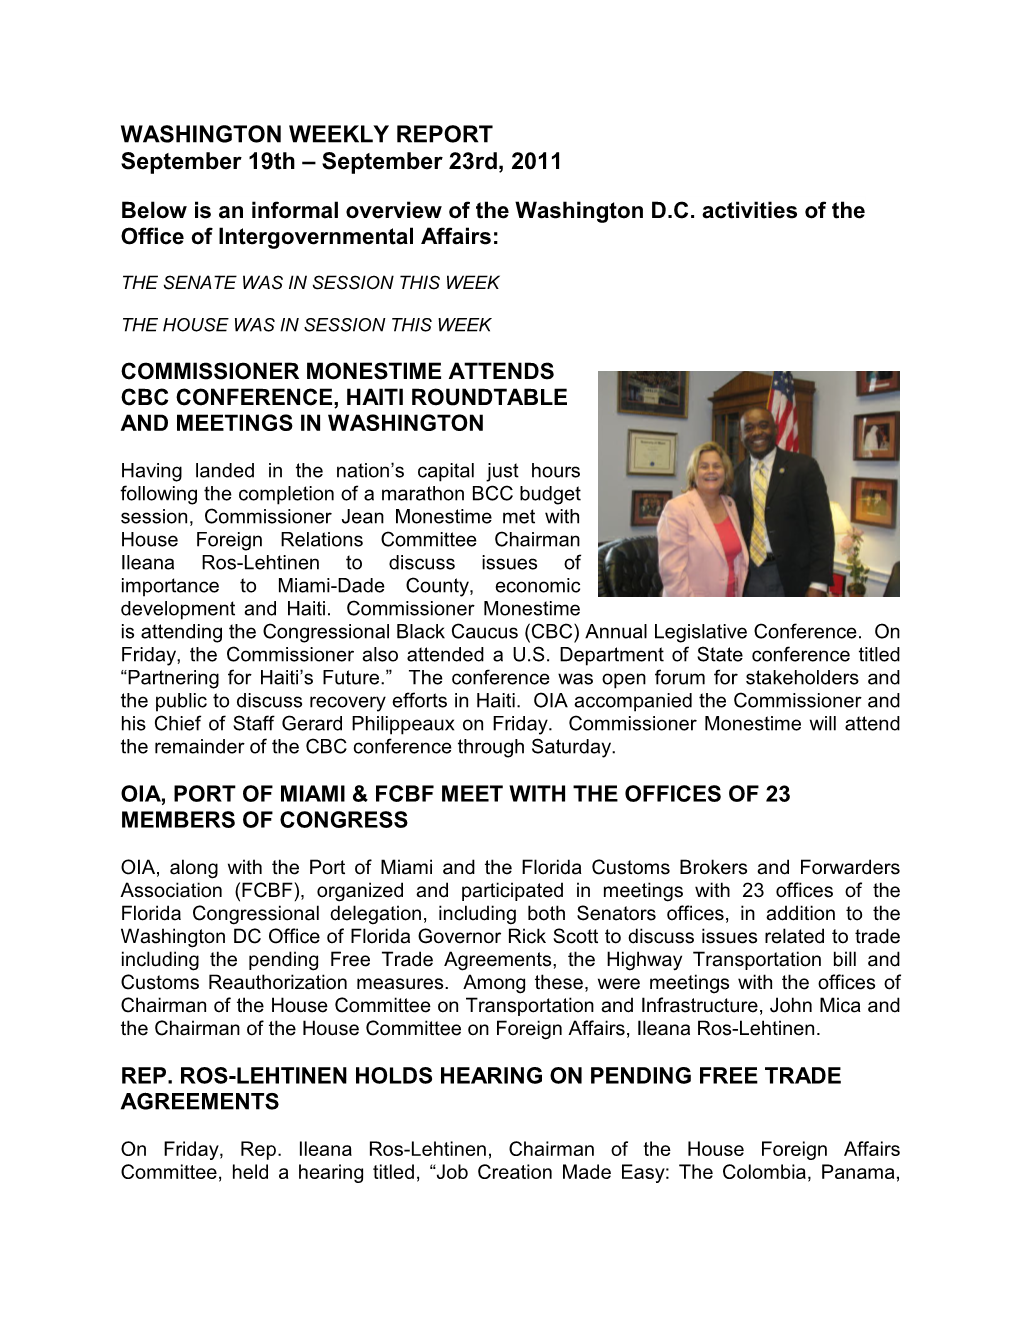 WASHINGTON WEEKLY REPORT September 19Th – September 23Rd, 2011